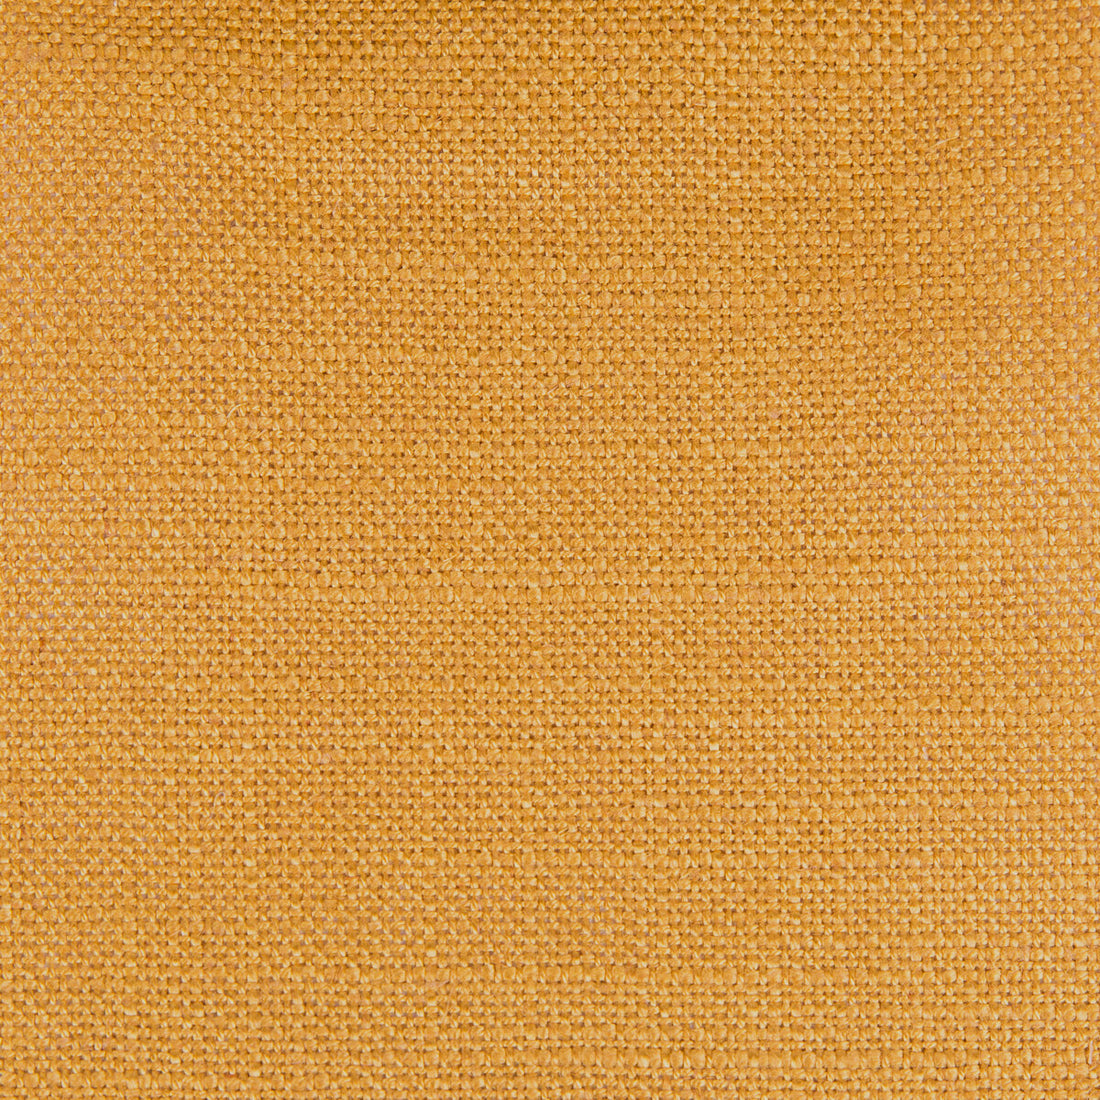 Peru fabric in albero color - pattern GDT5548.007.0 - by Gaston y Daniela in the Gaston Nuevo Mundo collection